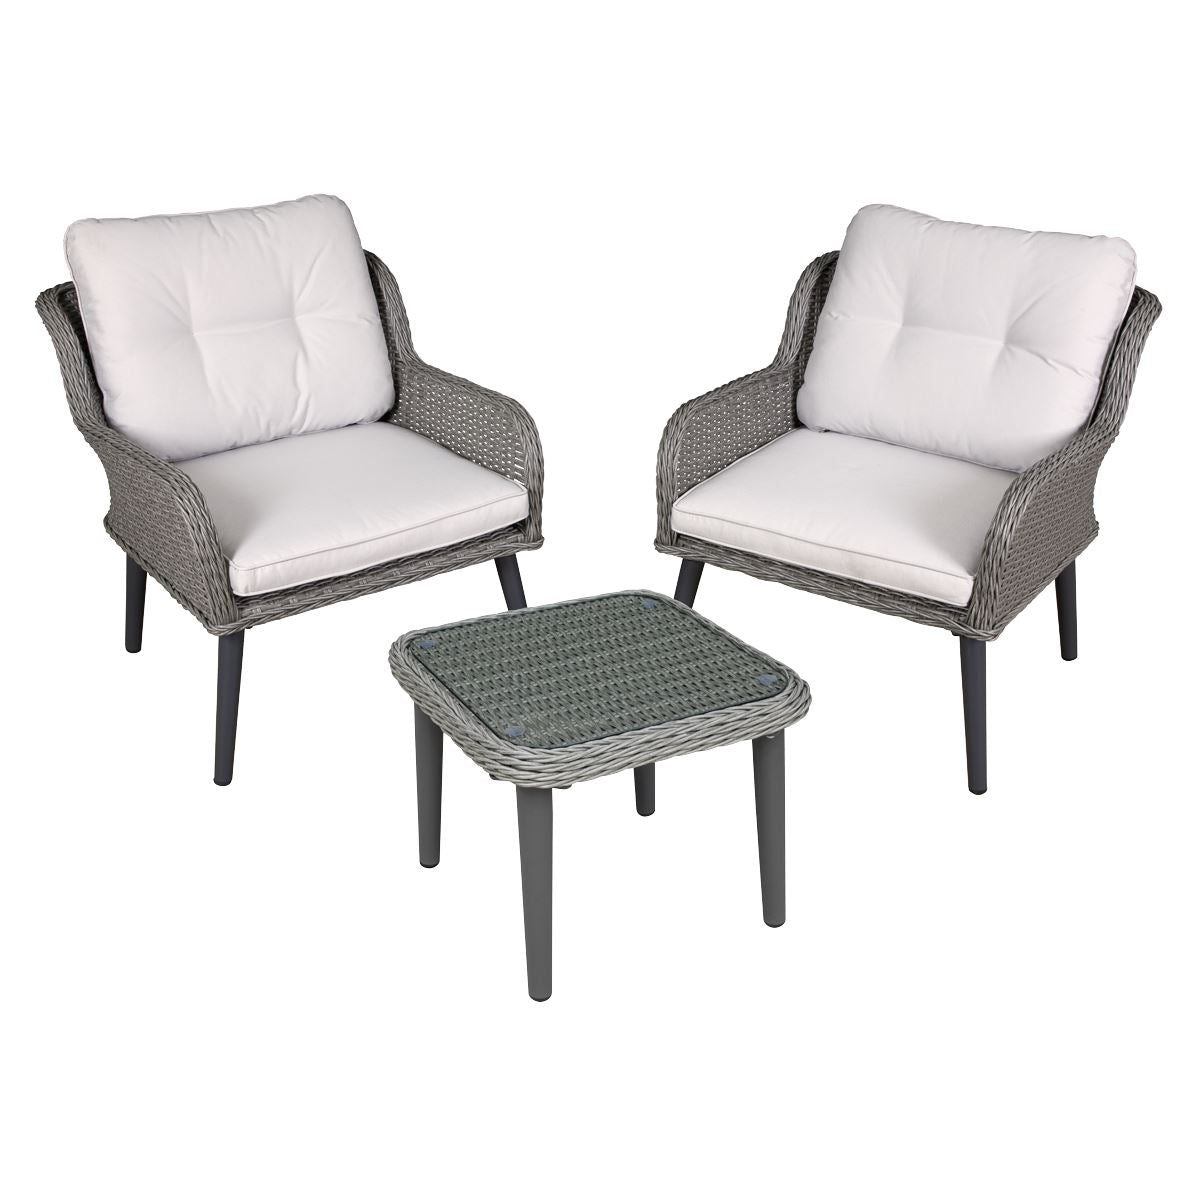 Dellonda Buxton Rattan Wicker Outdoor Balcony Set, Lounge Chairs, Grey